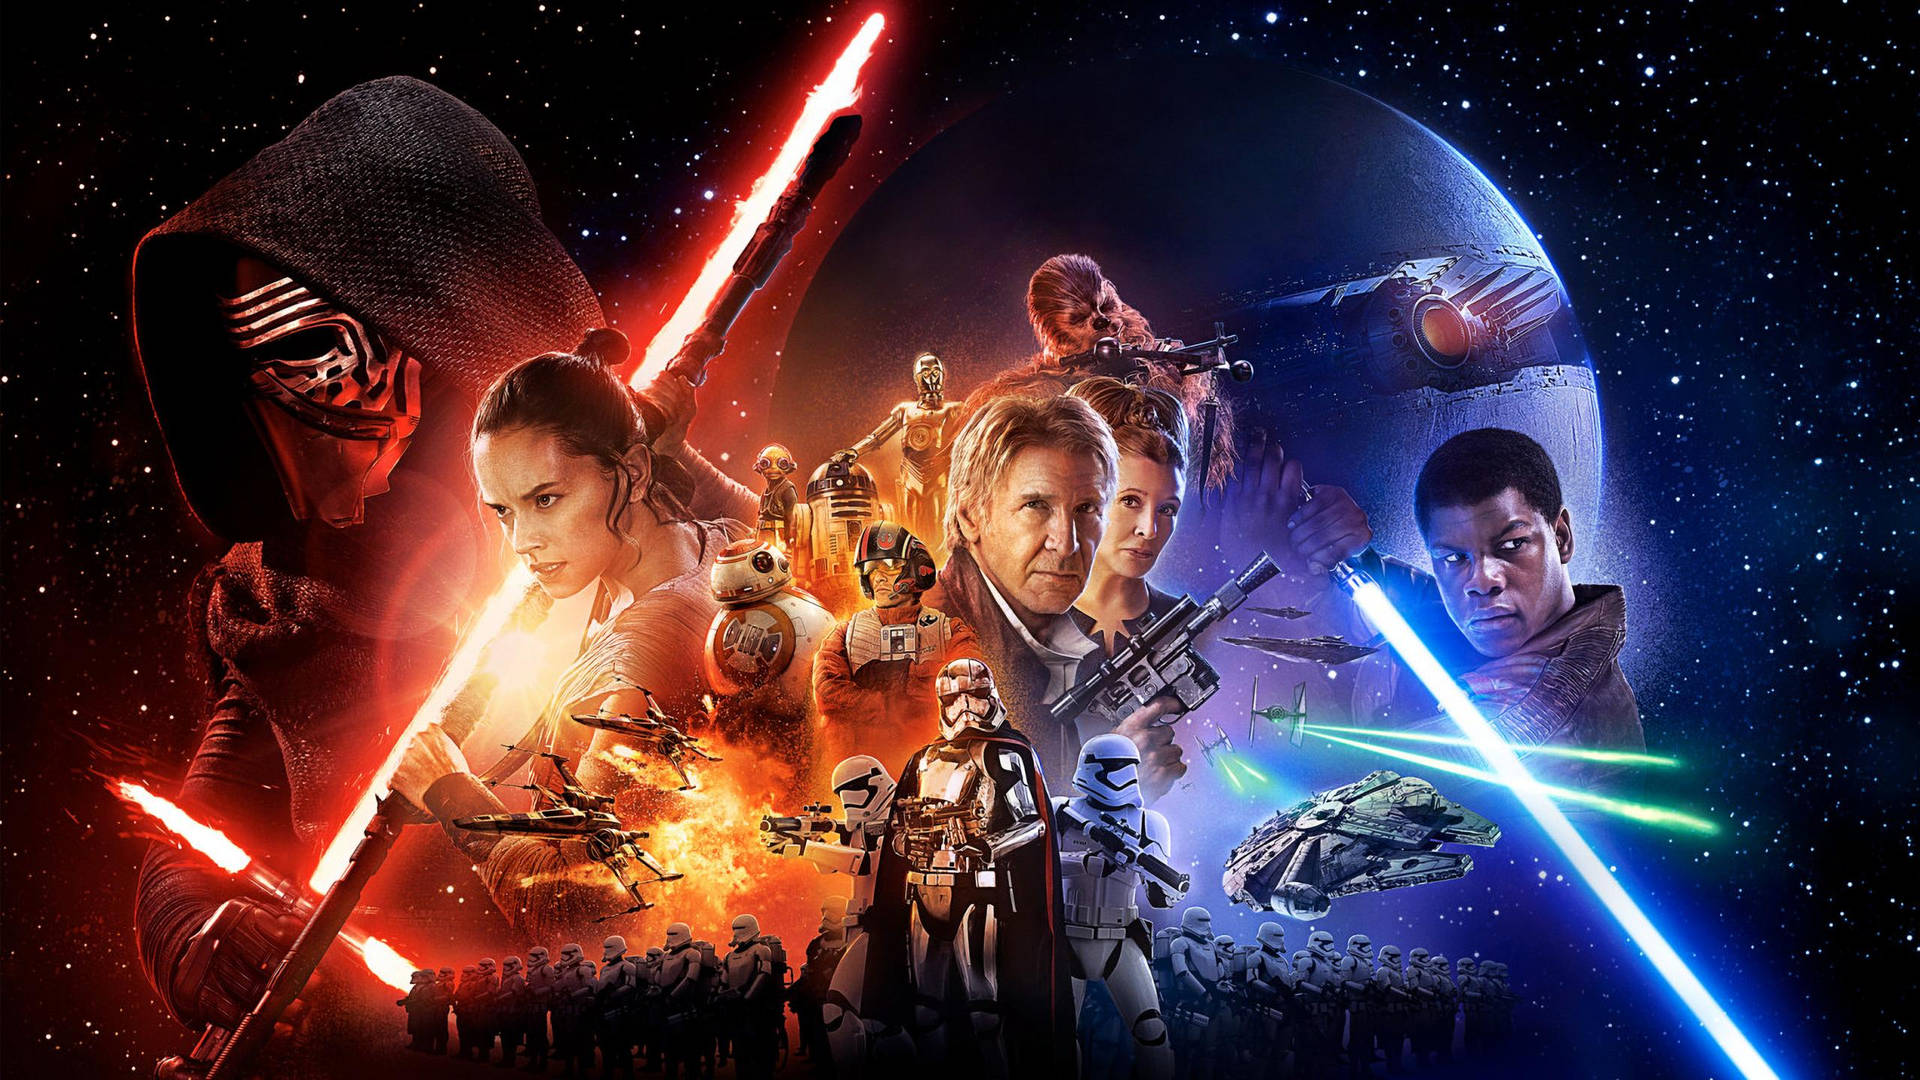 Free Star Wars Wallpaper Downloads, [500+] Star Wars Wallpapers for FREE |  